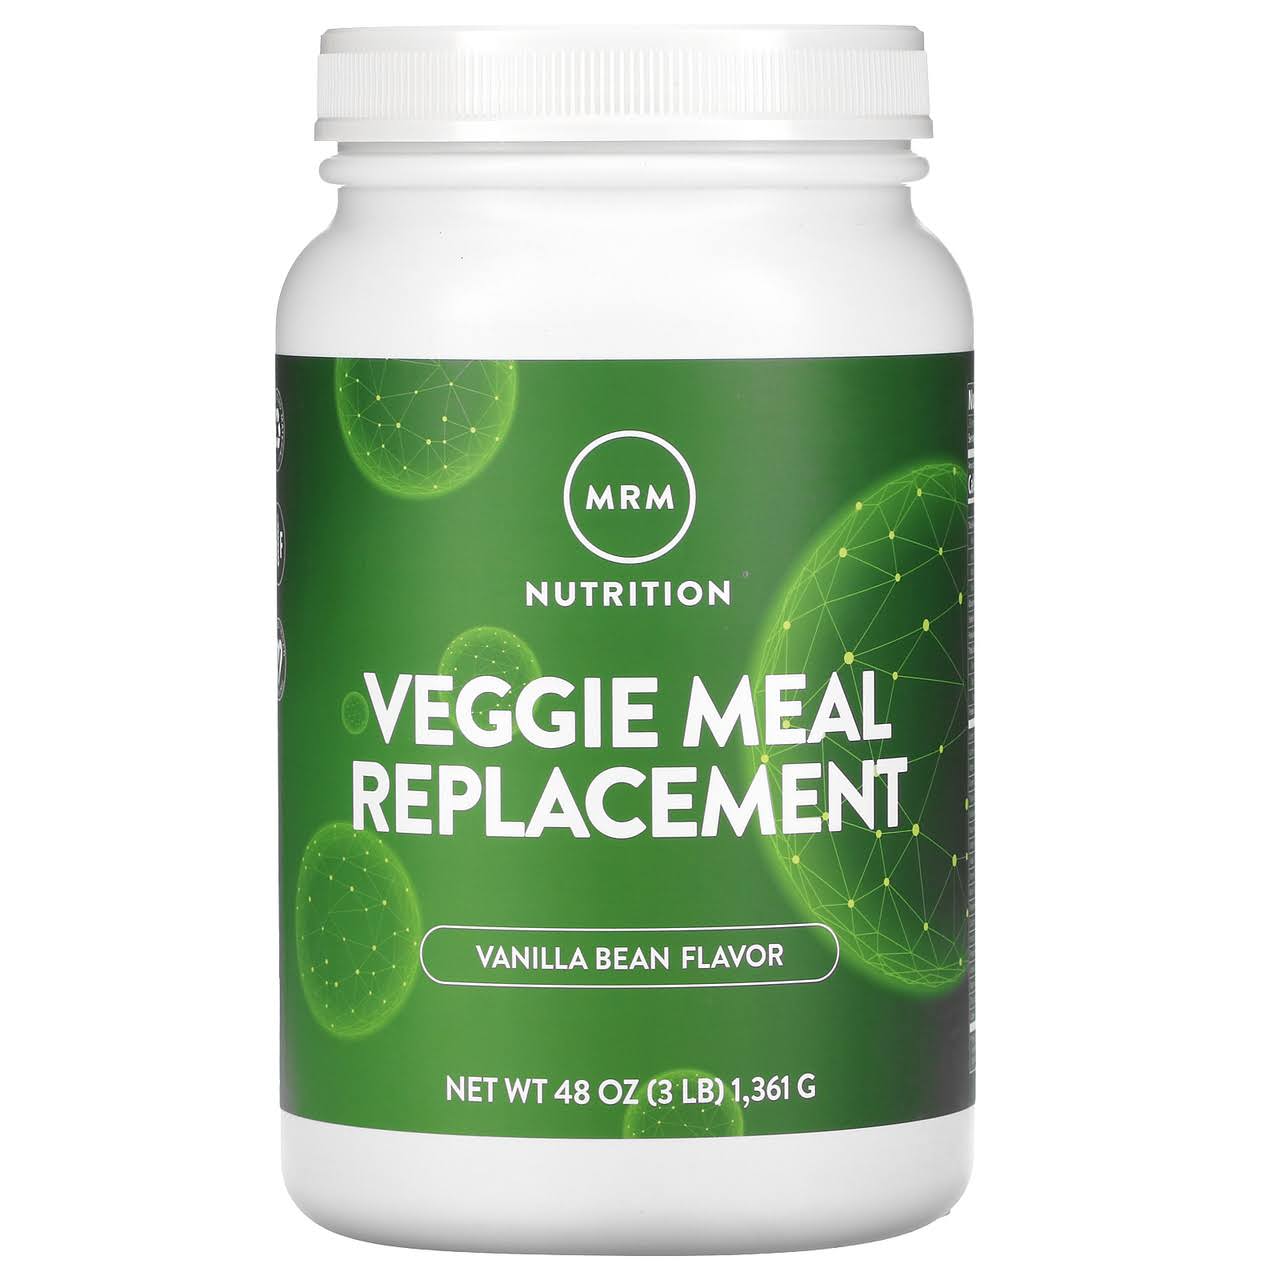 Mrm Veggie Meal Replacement - Vanilla Bean, 1363g